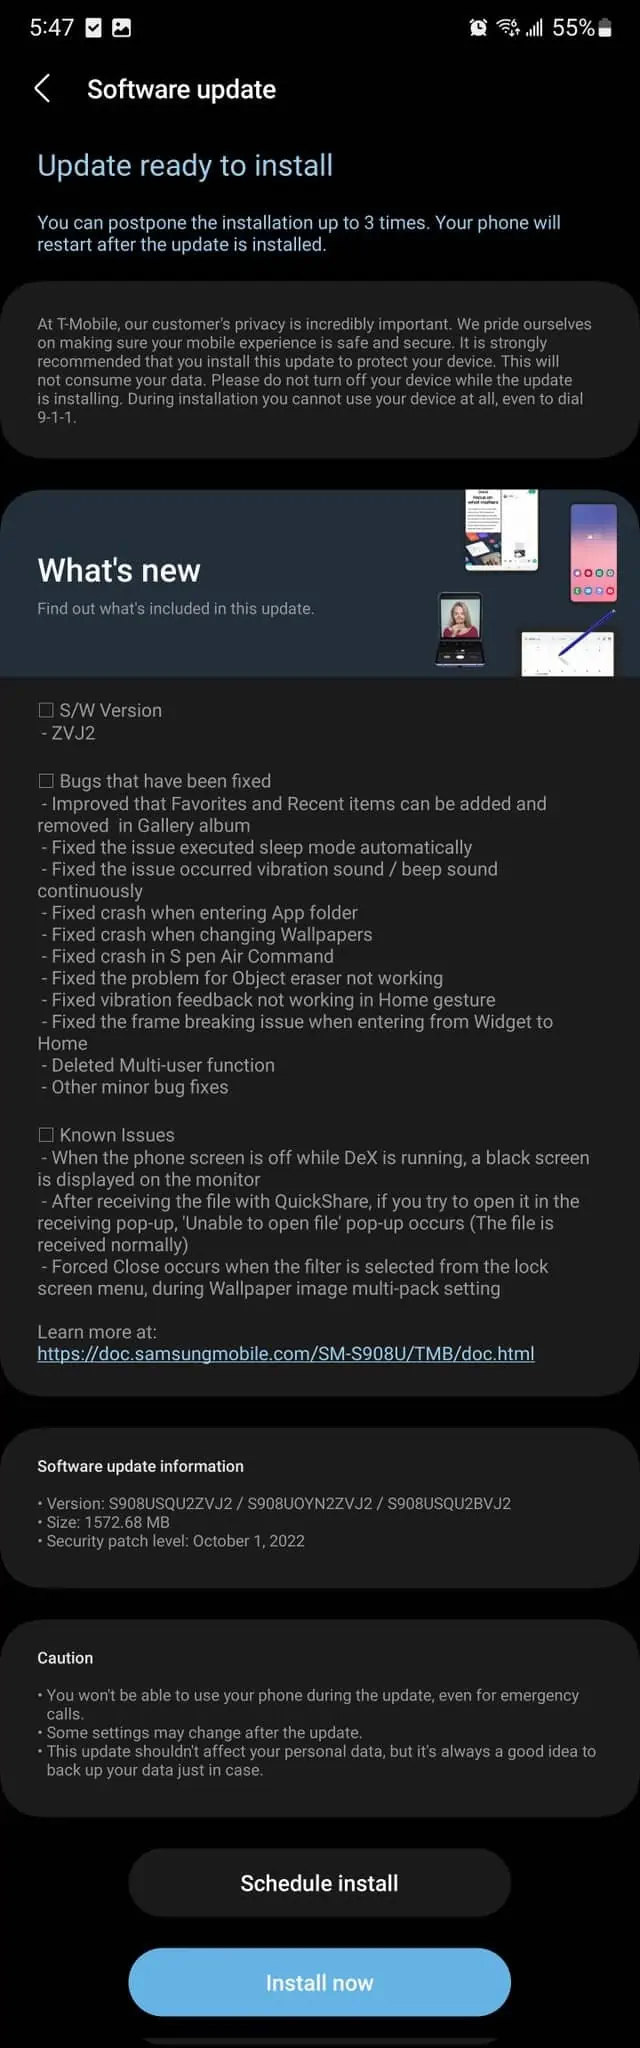 Samsung Galaxy S22 Android 13 beta 4